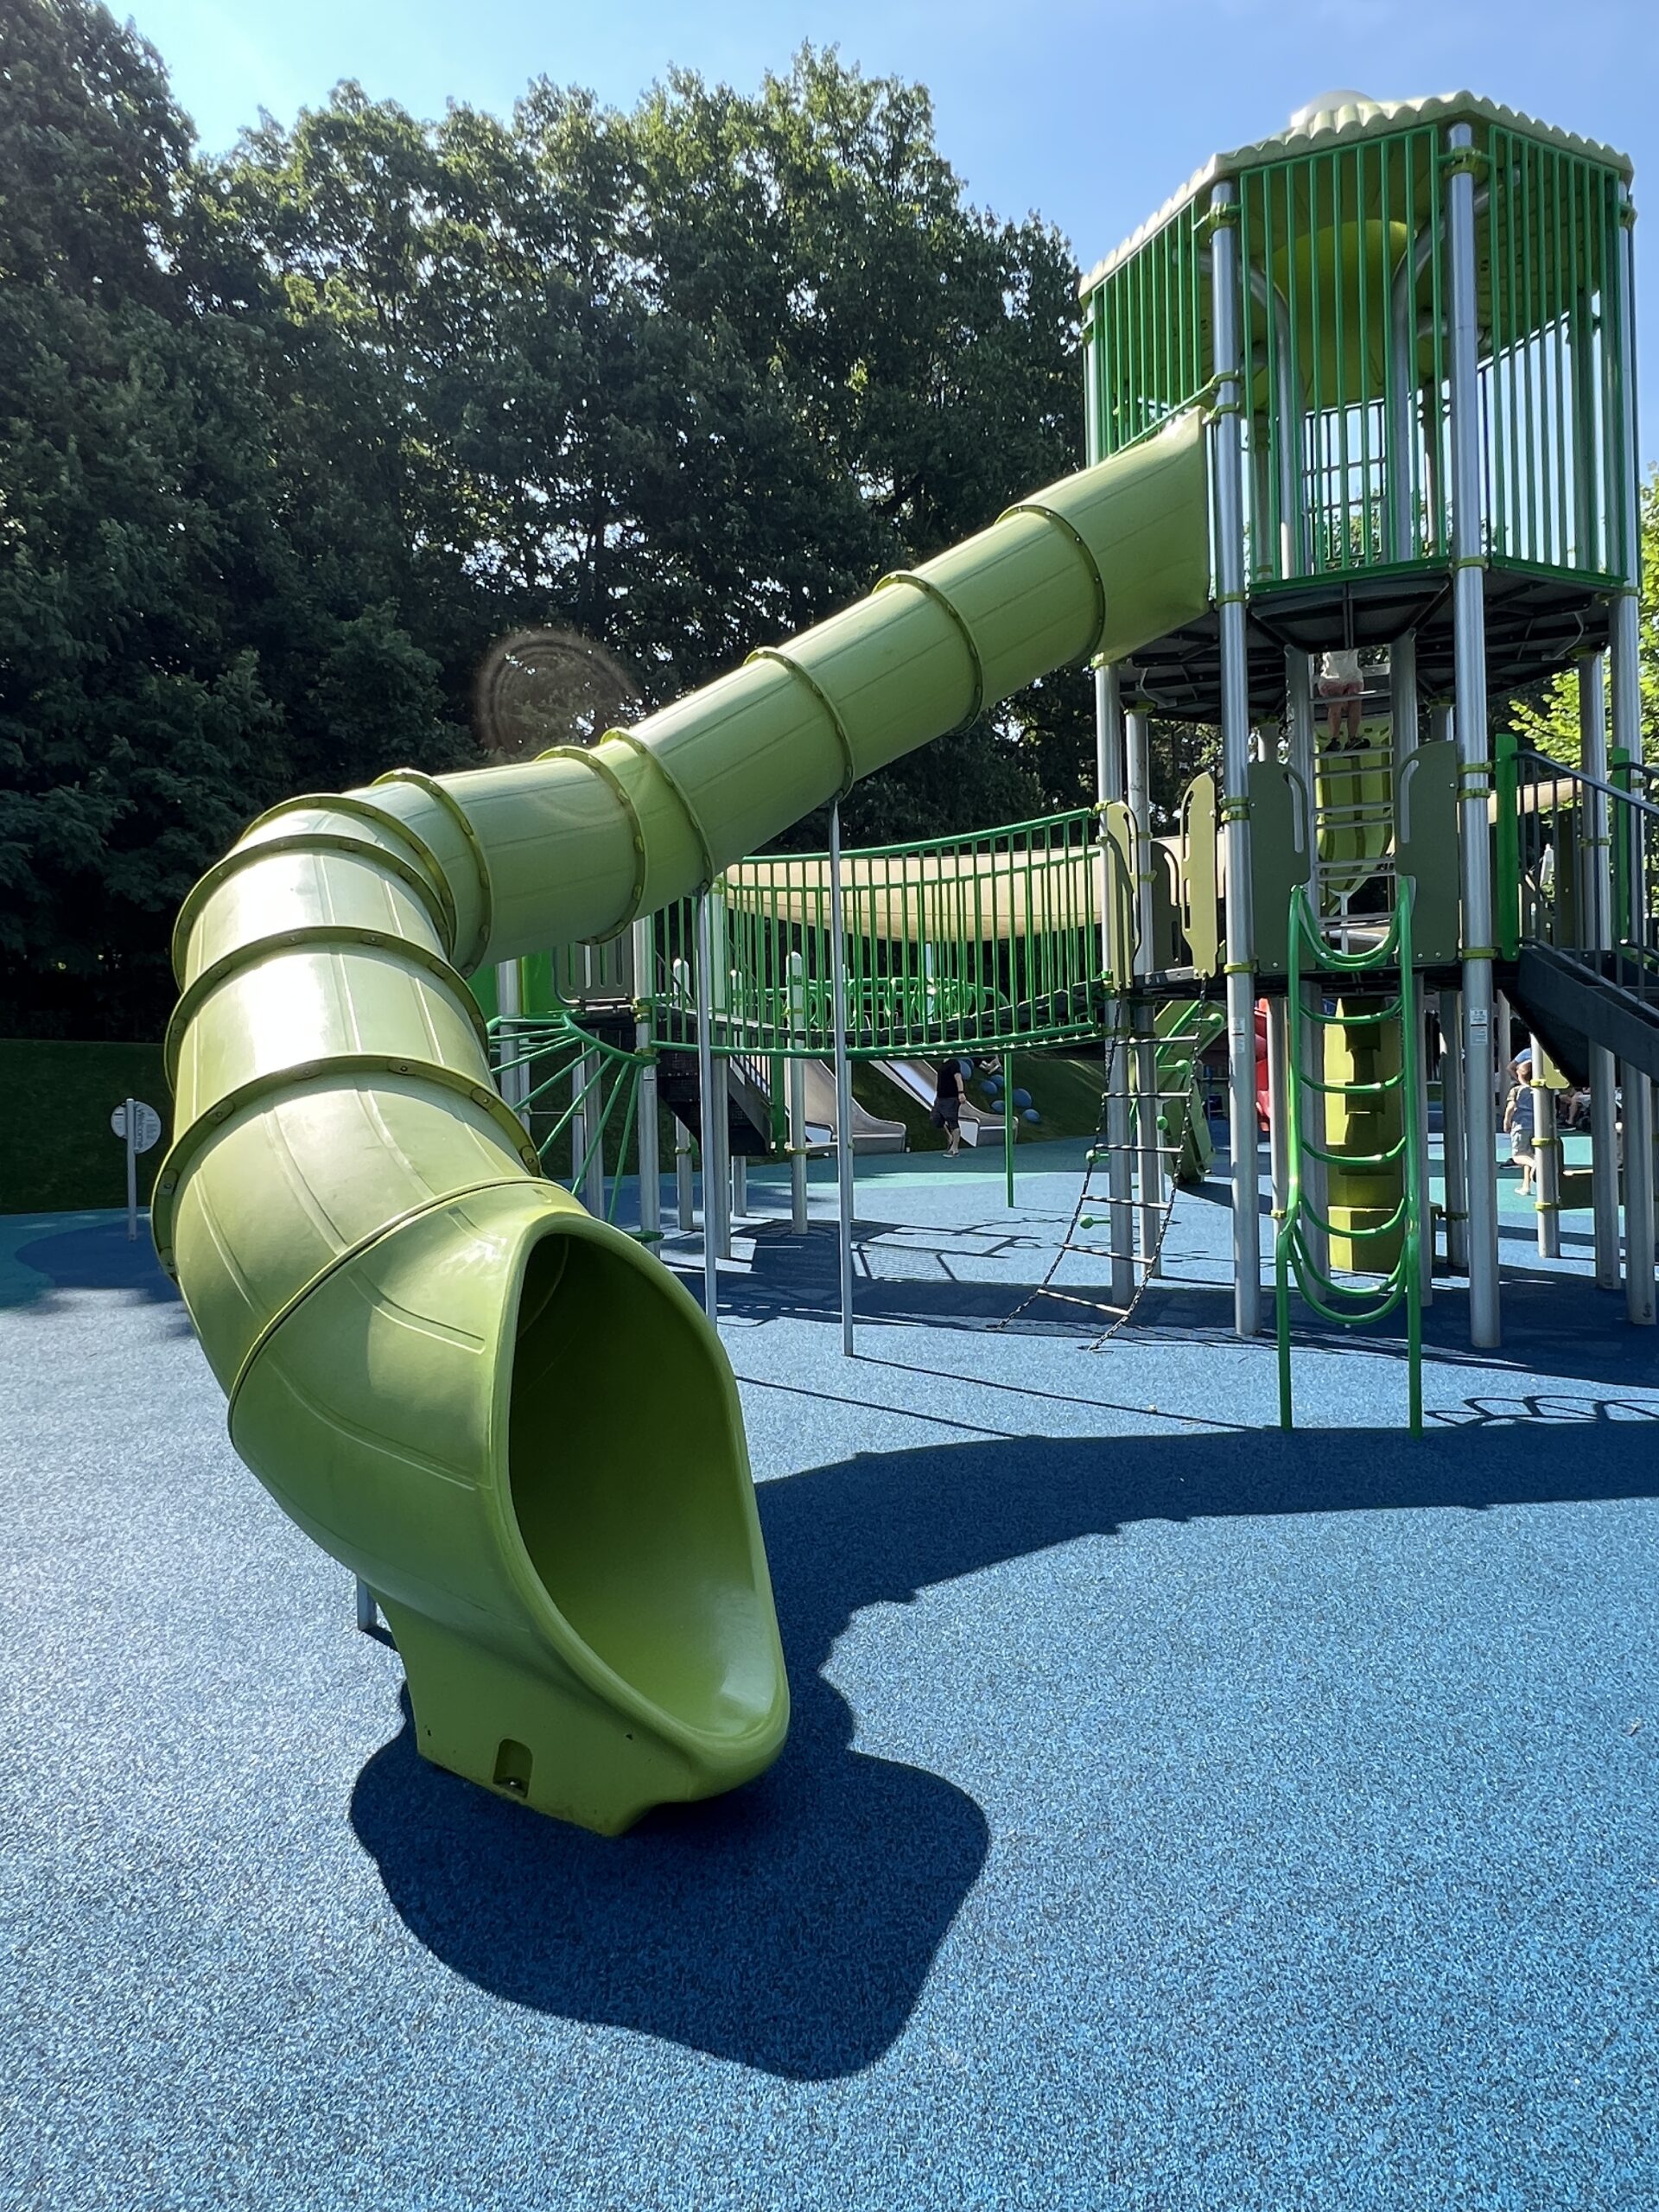 Verona Park Playground in Verona NJ - SLIDES - tall long tunnel slide with slight curve TALL image